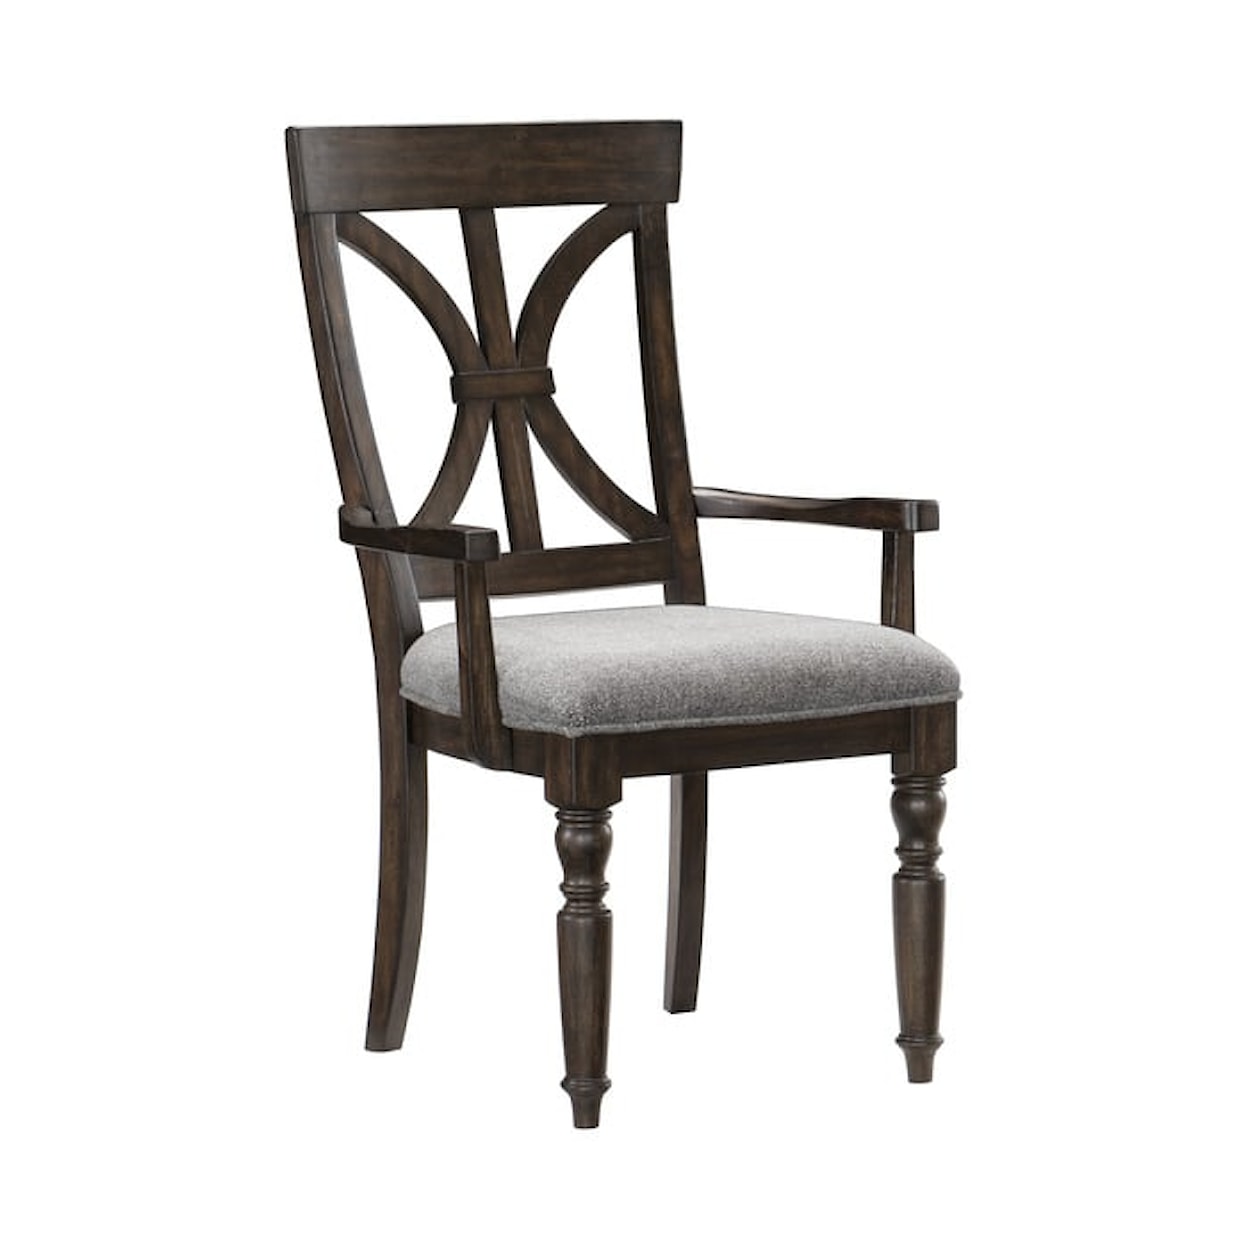 Homelegance Furniture Cardano Arm Chair